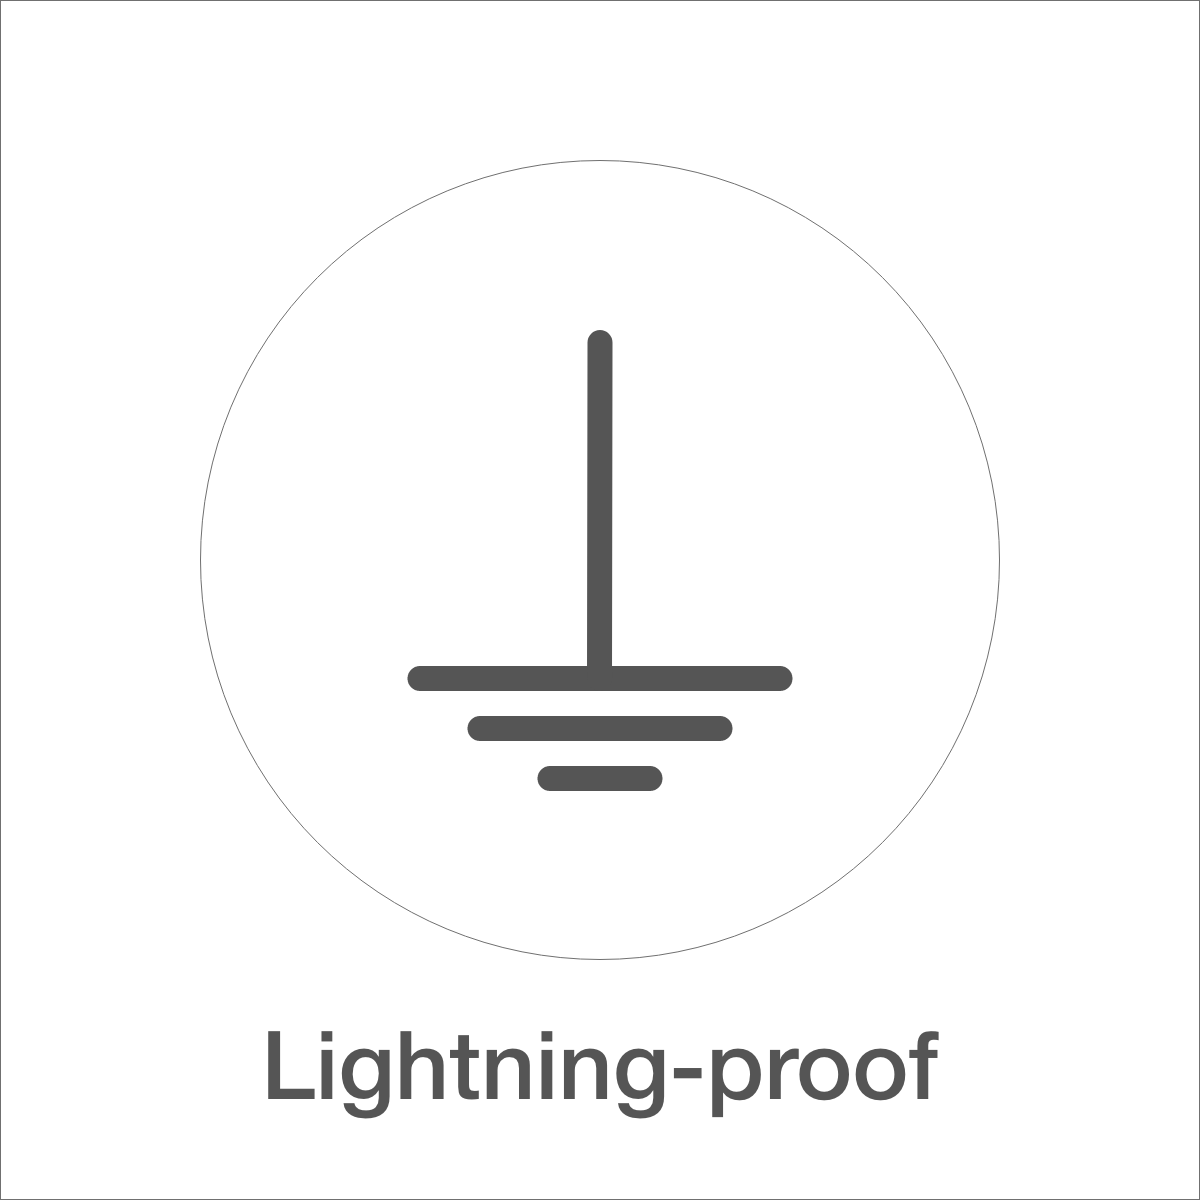 Lightning-proof icon